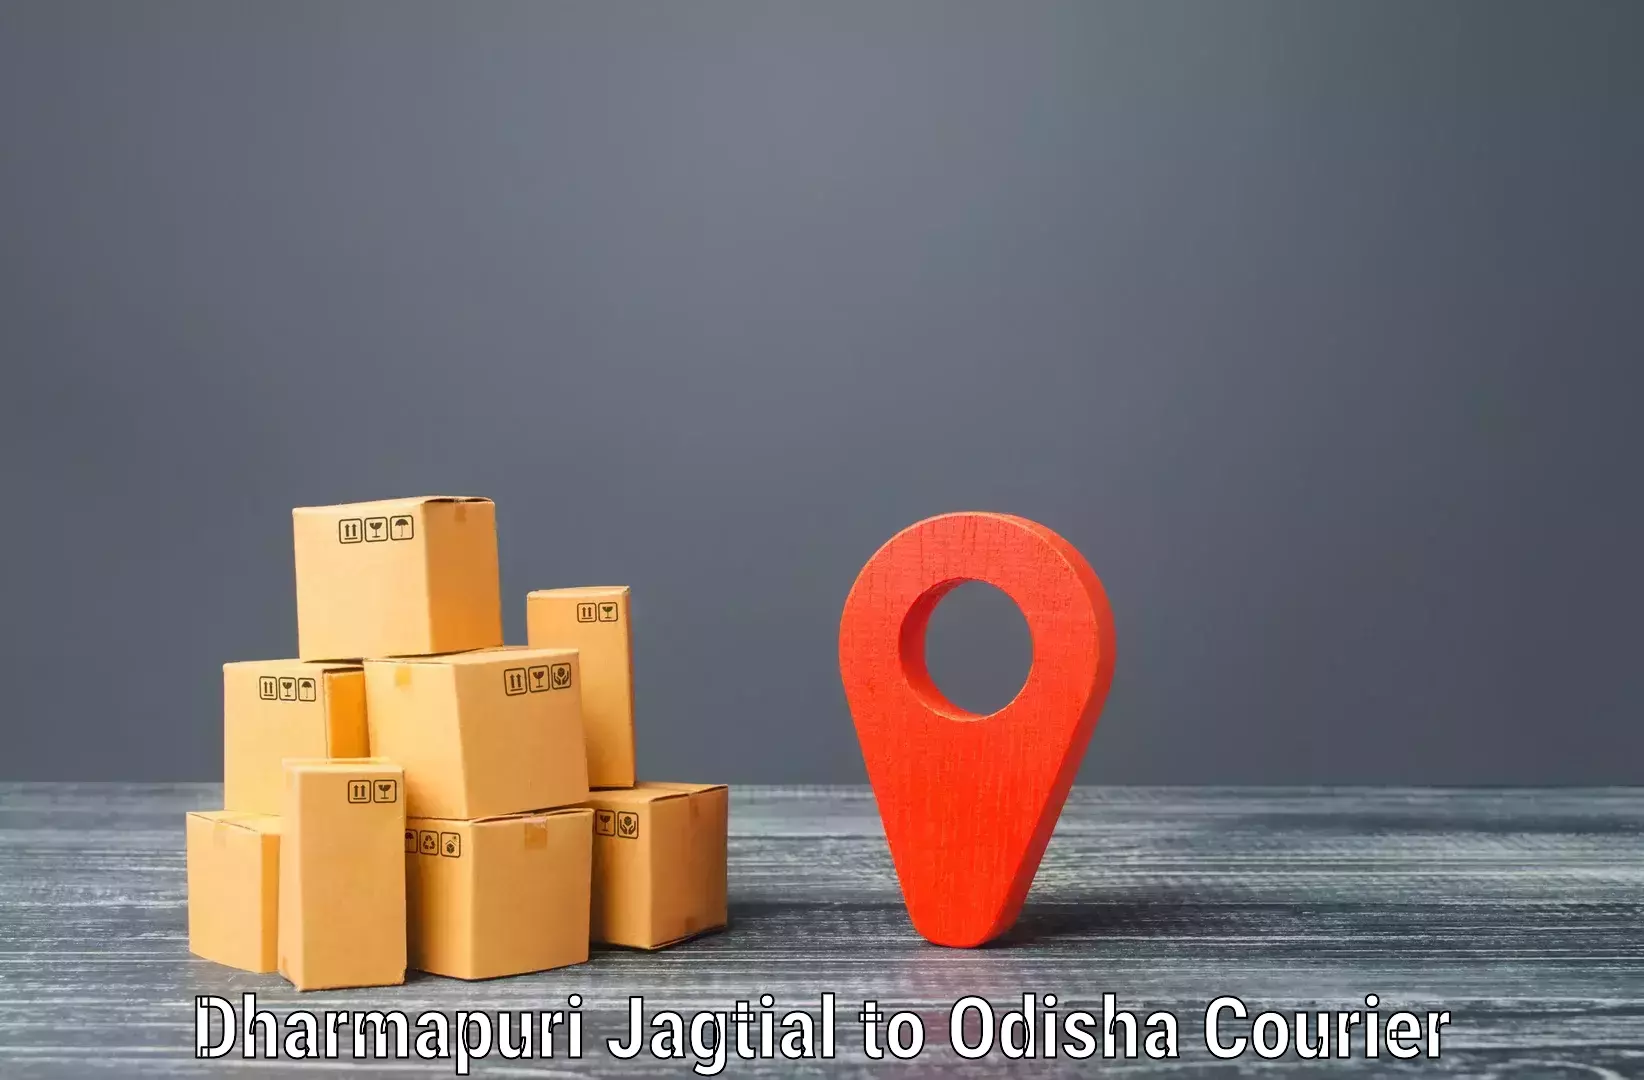 Multi-national courier services Dharmapuri Jagtial to Odisha